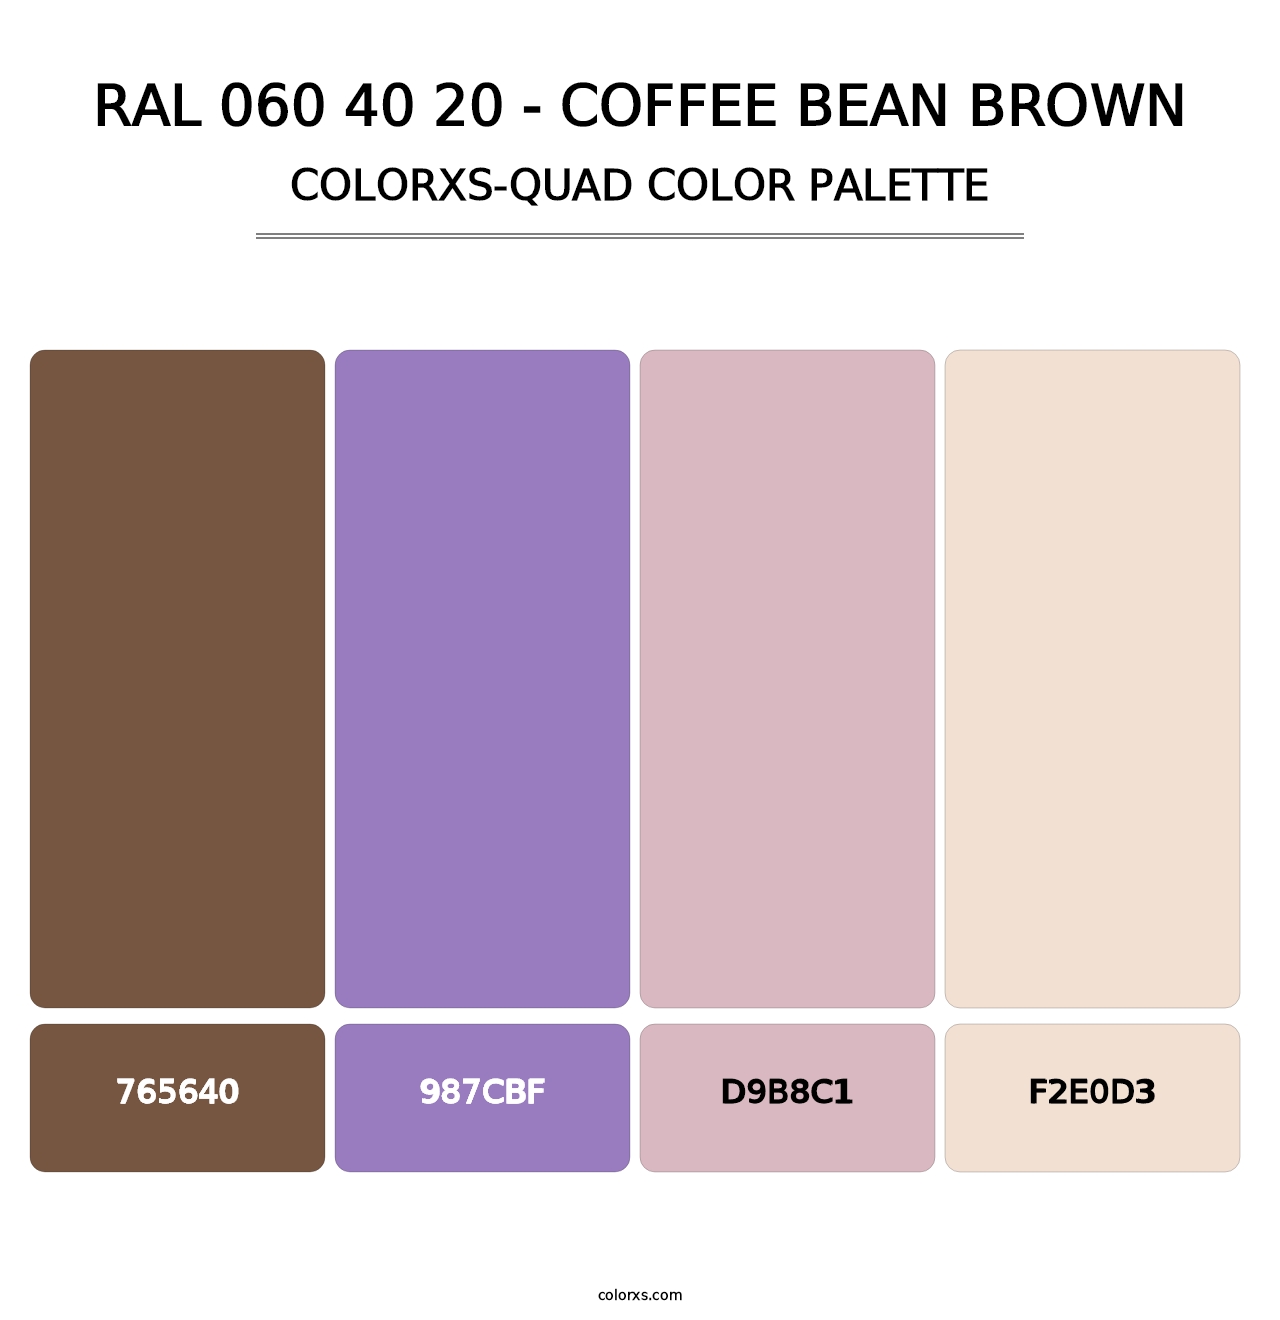 RAL 060 40 20 - Coffee Bean Brown - Colorxs Quad Palette